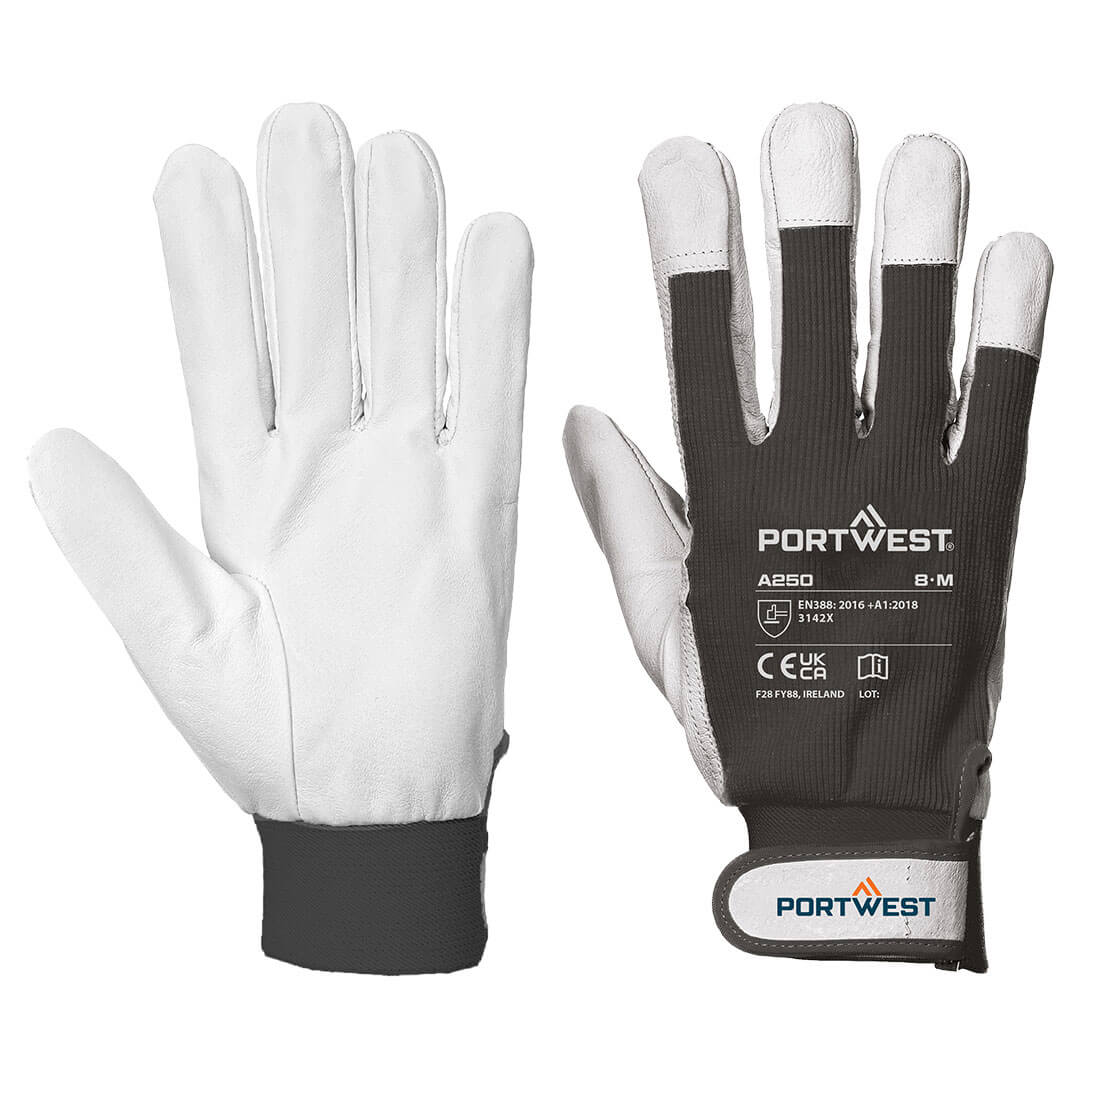 Tergsus Glove A250